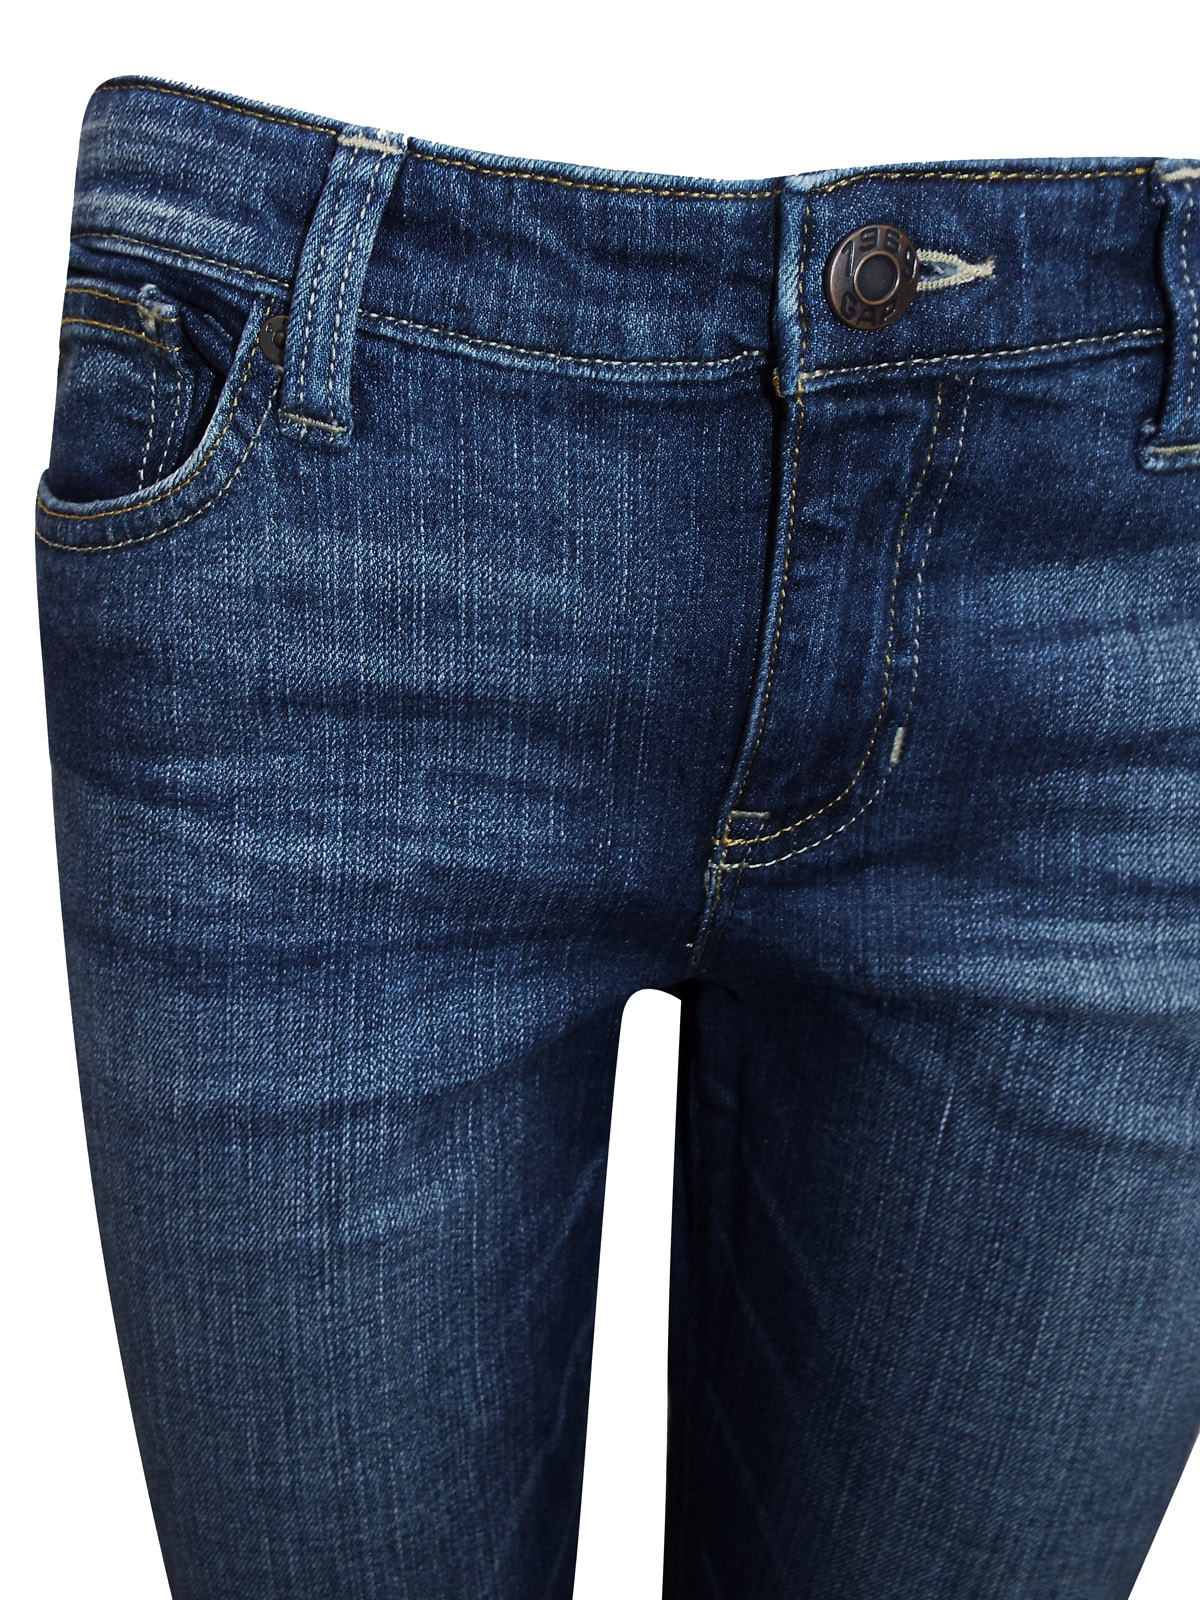 GAP BLUE Skinny Fit Denim Jeans - Size 6 to 12